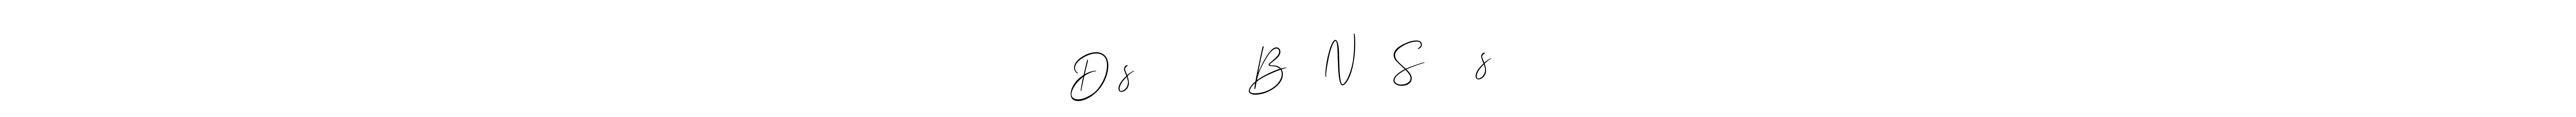 Create a beautiful signature design for name Dɪsᴀᴘᴘᴏɪɴᴛᴇᴅ Bᴜᴛ Nᴏᴛ Sᴜʀᴘʀɪsᴇᴅ. With this signature (Allison_Script) fonts, you can make a handwritten signature for free. Dɪsᴀᴘᴘᴏɪɴᴛᴇᴅ Bᴜᴛ Nᴏᴛ Sᴜʀᴘʀɪsᴇᴅ signature style 2 images and pictures png